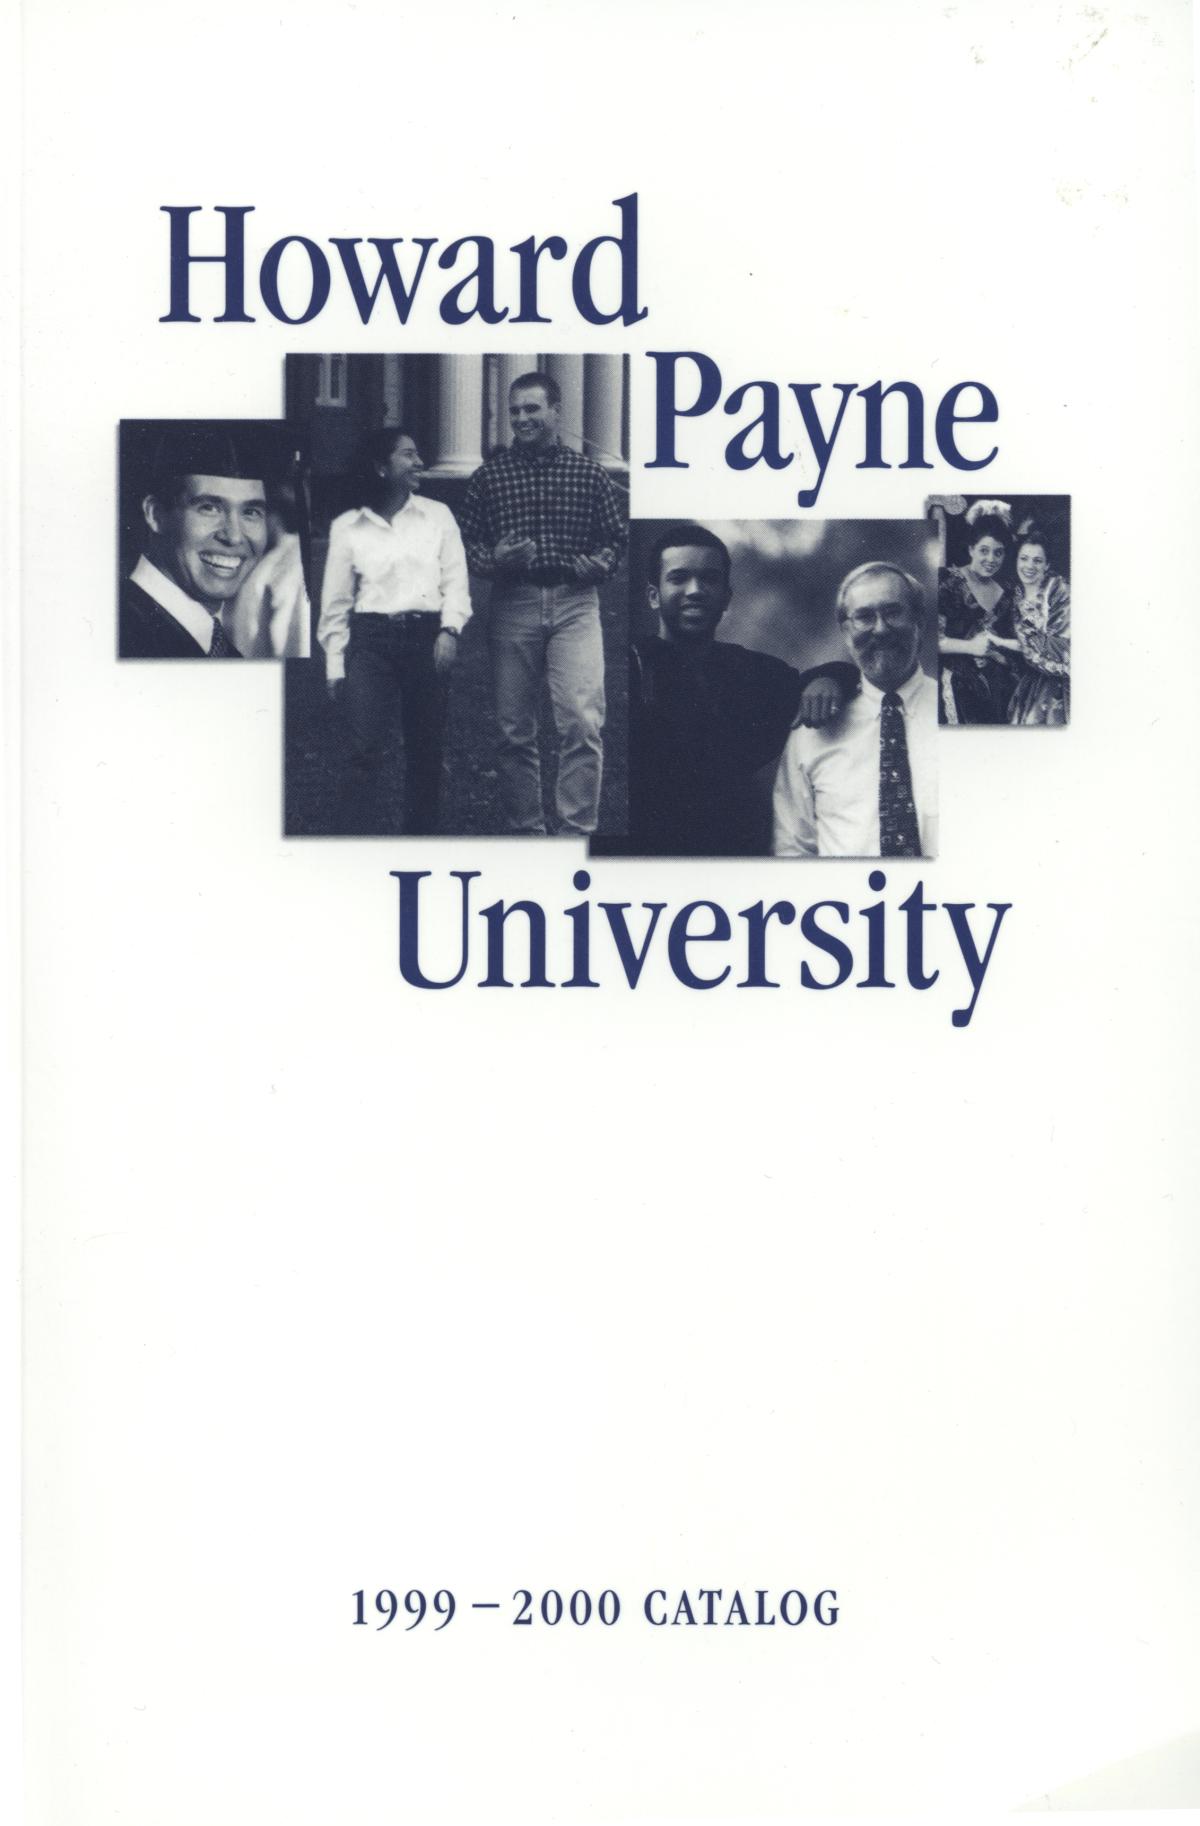 Catalog of Howard Payne University, 1999-2000
                                                
                                                    Front Cover
                                                